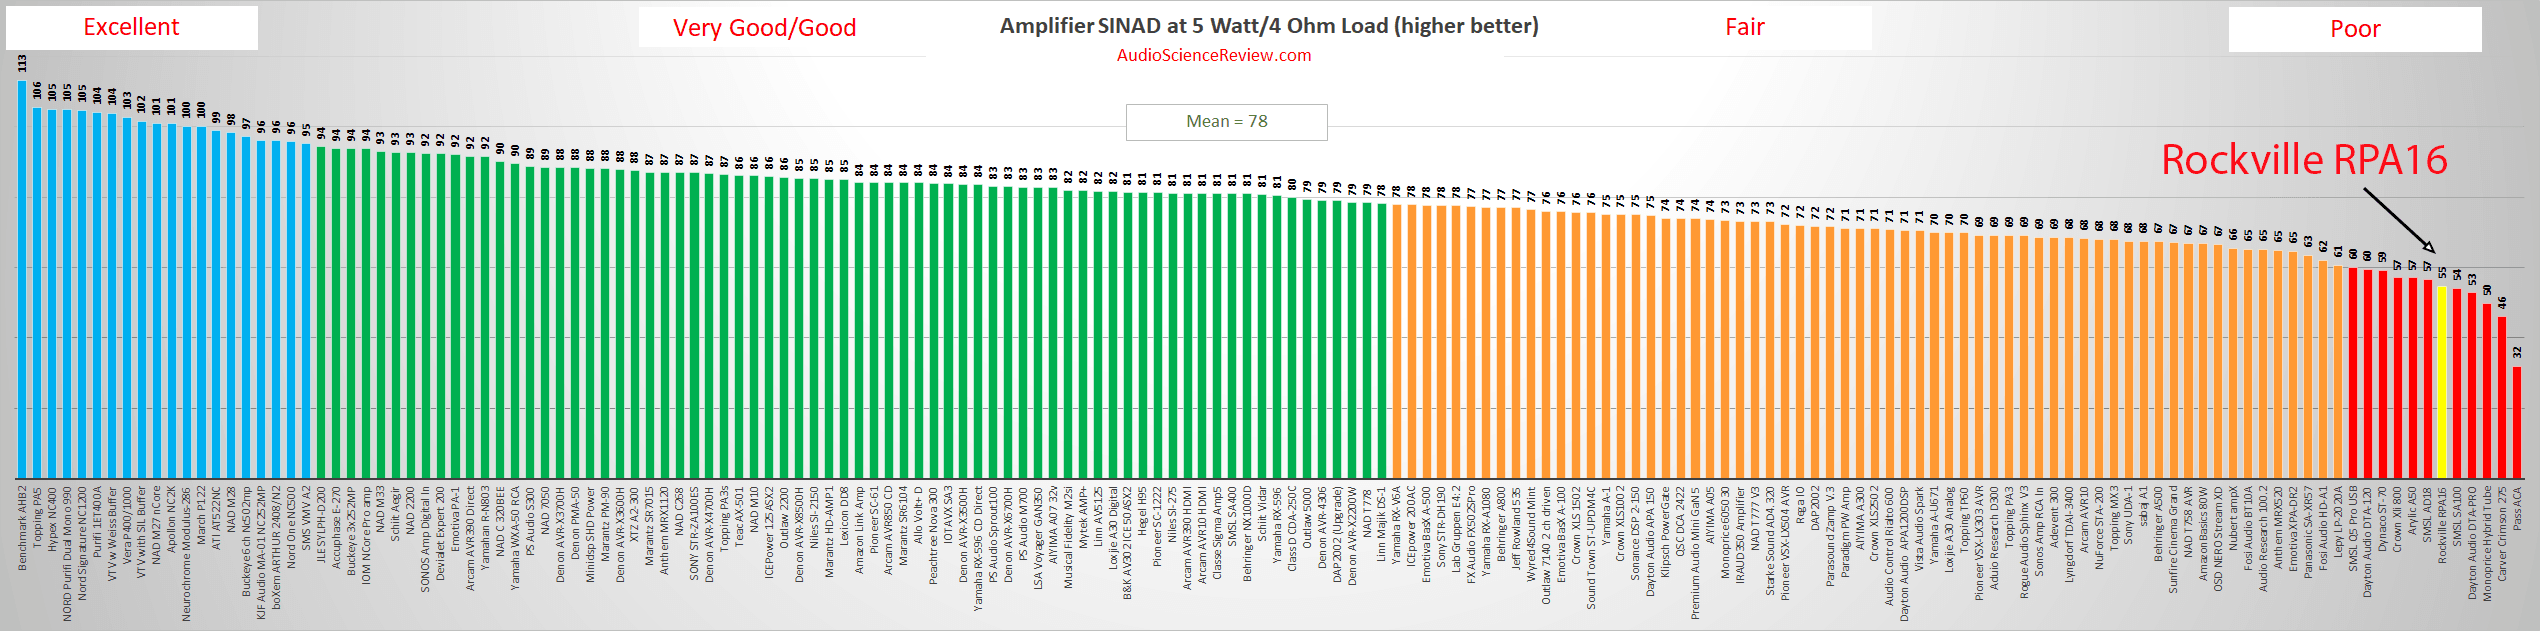 Best pro amplifier review subwoofer.png